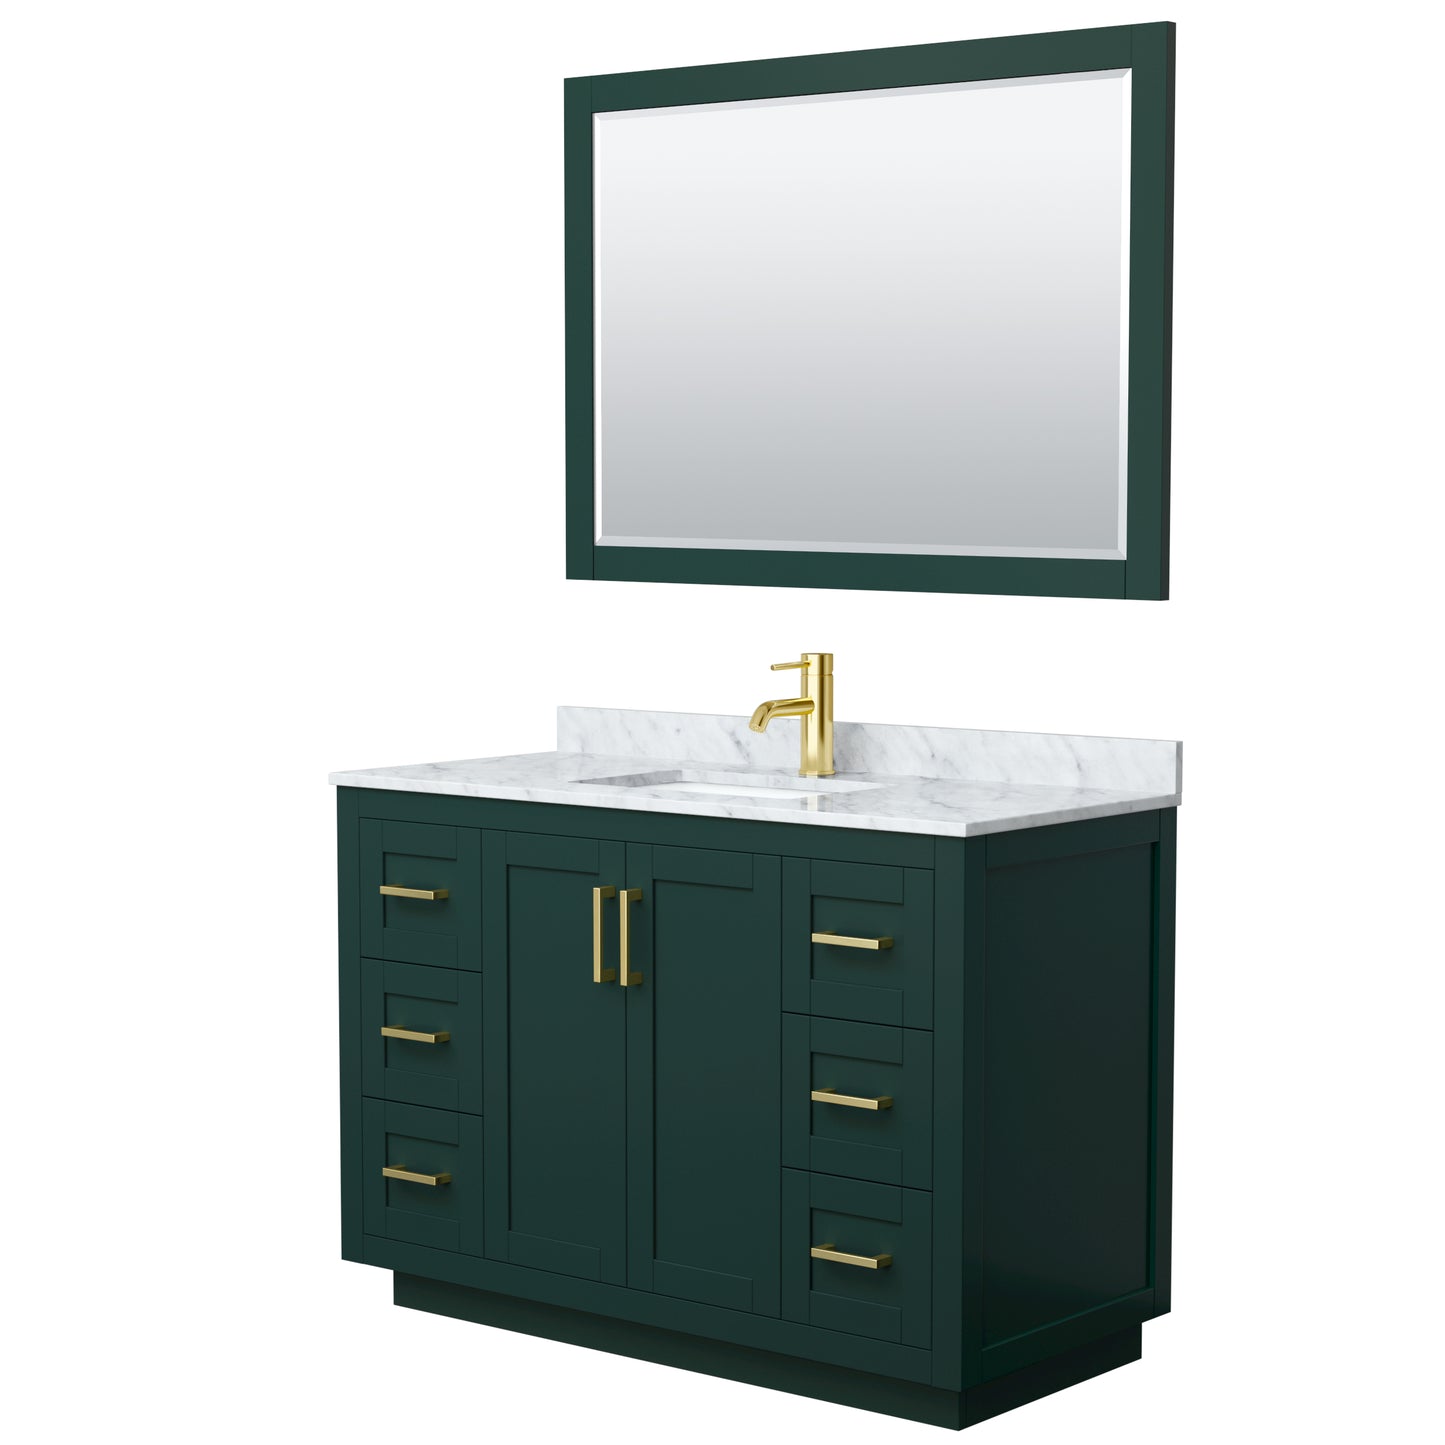 Wyndham Miranda 48 Inch Single Bathroom Vanity in Green with White Carrara Marble Countertop Undermount Square Sink with Trim - Luxe Bathroom Vanities